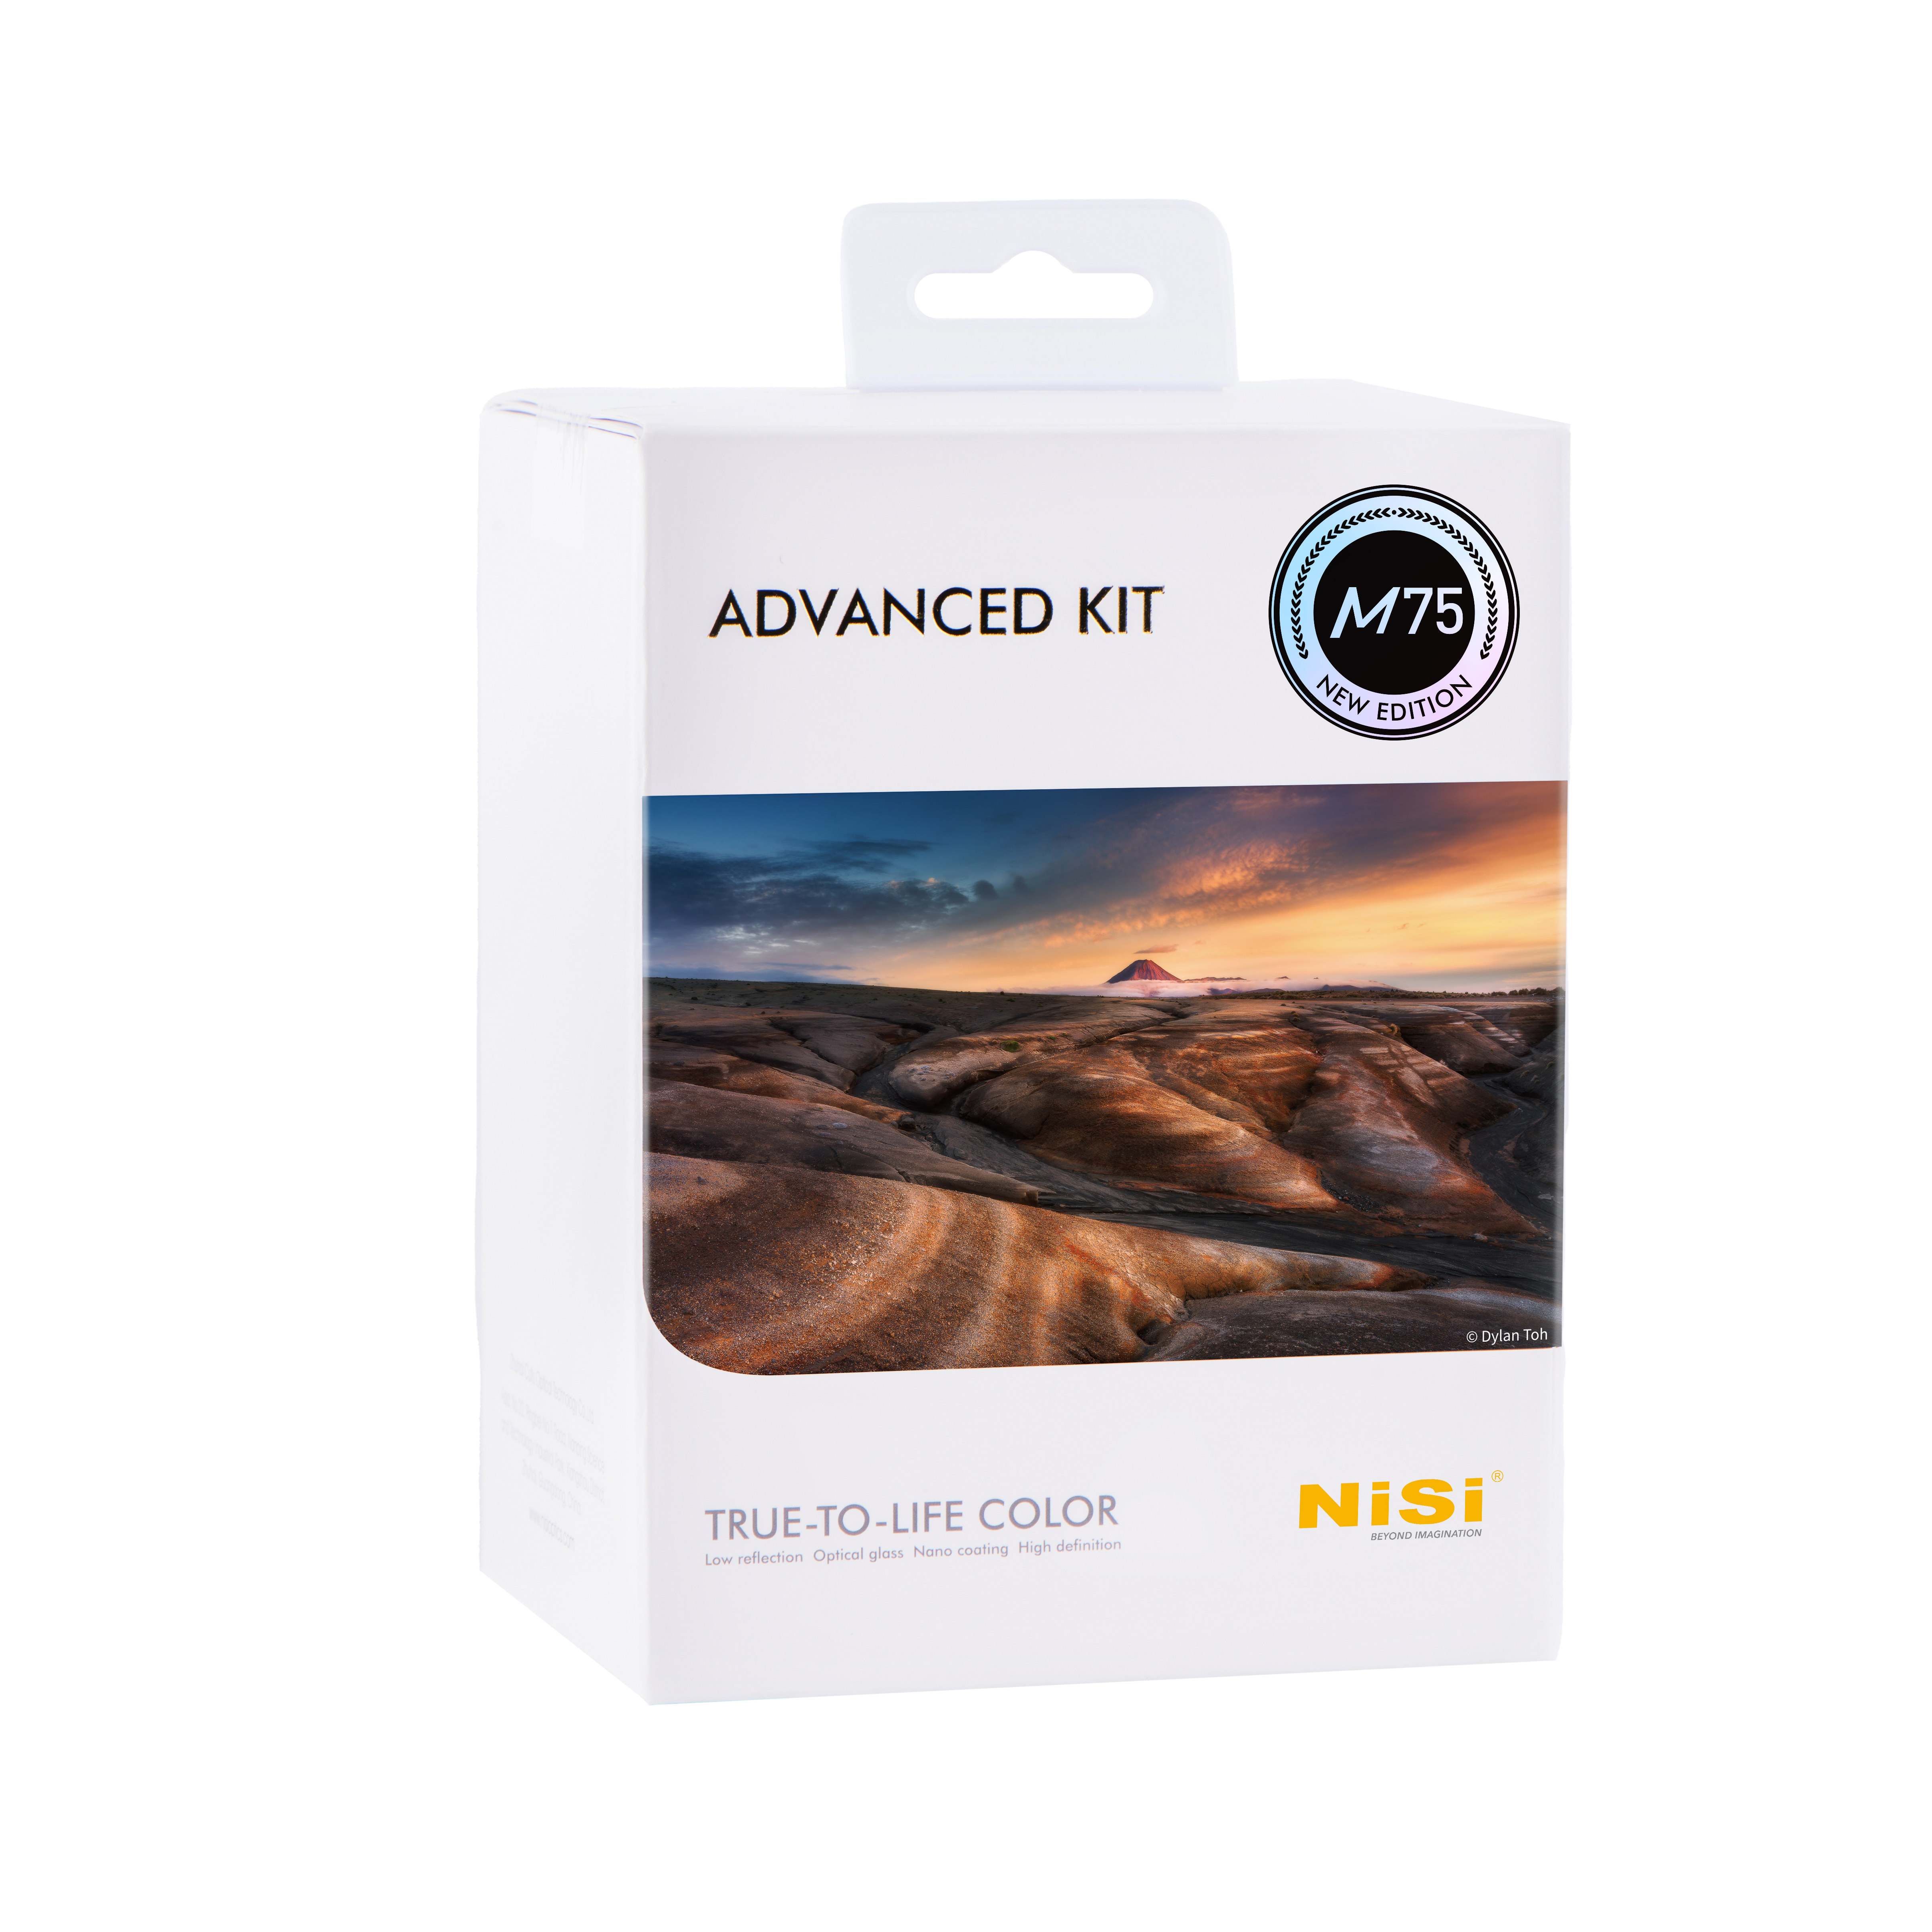 NiSi 75mm Filtersystem Advanced Kit